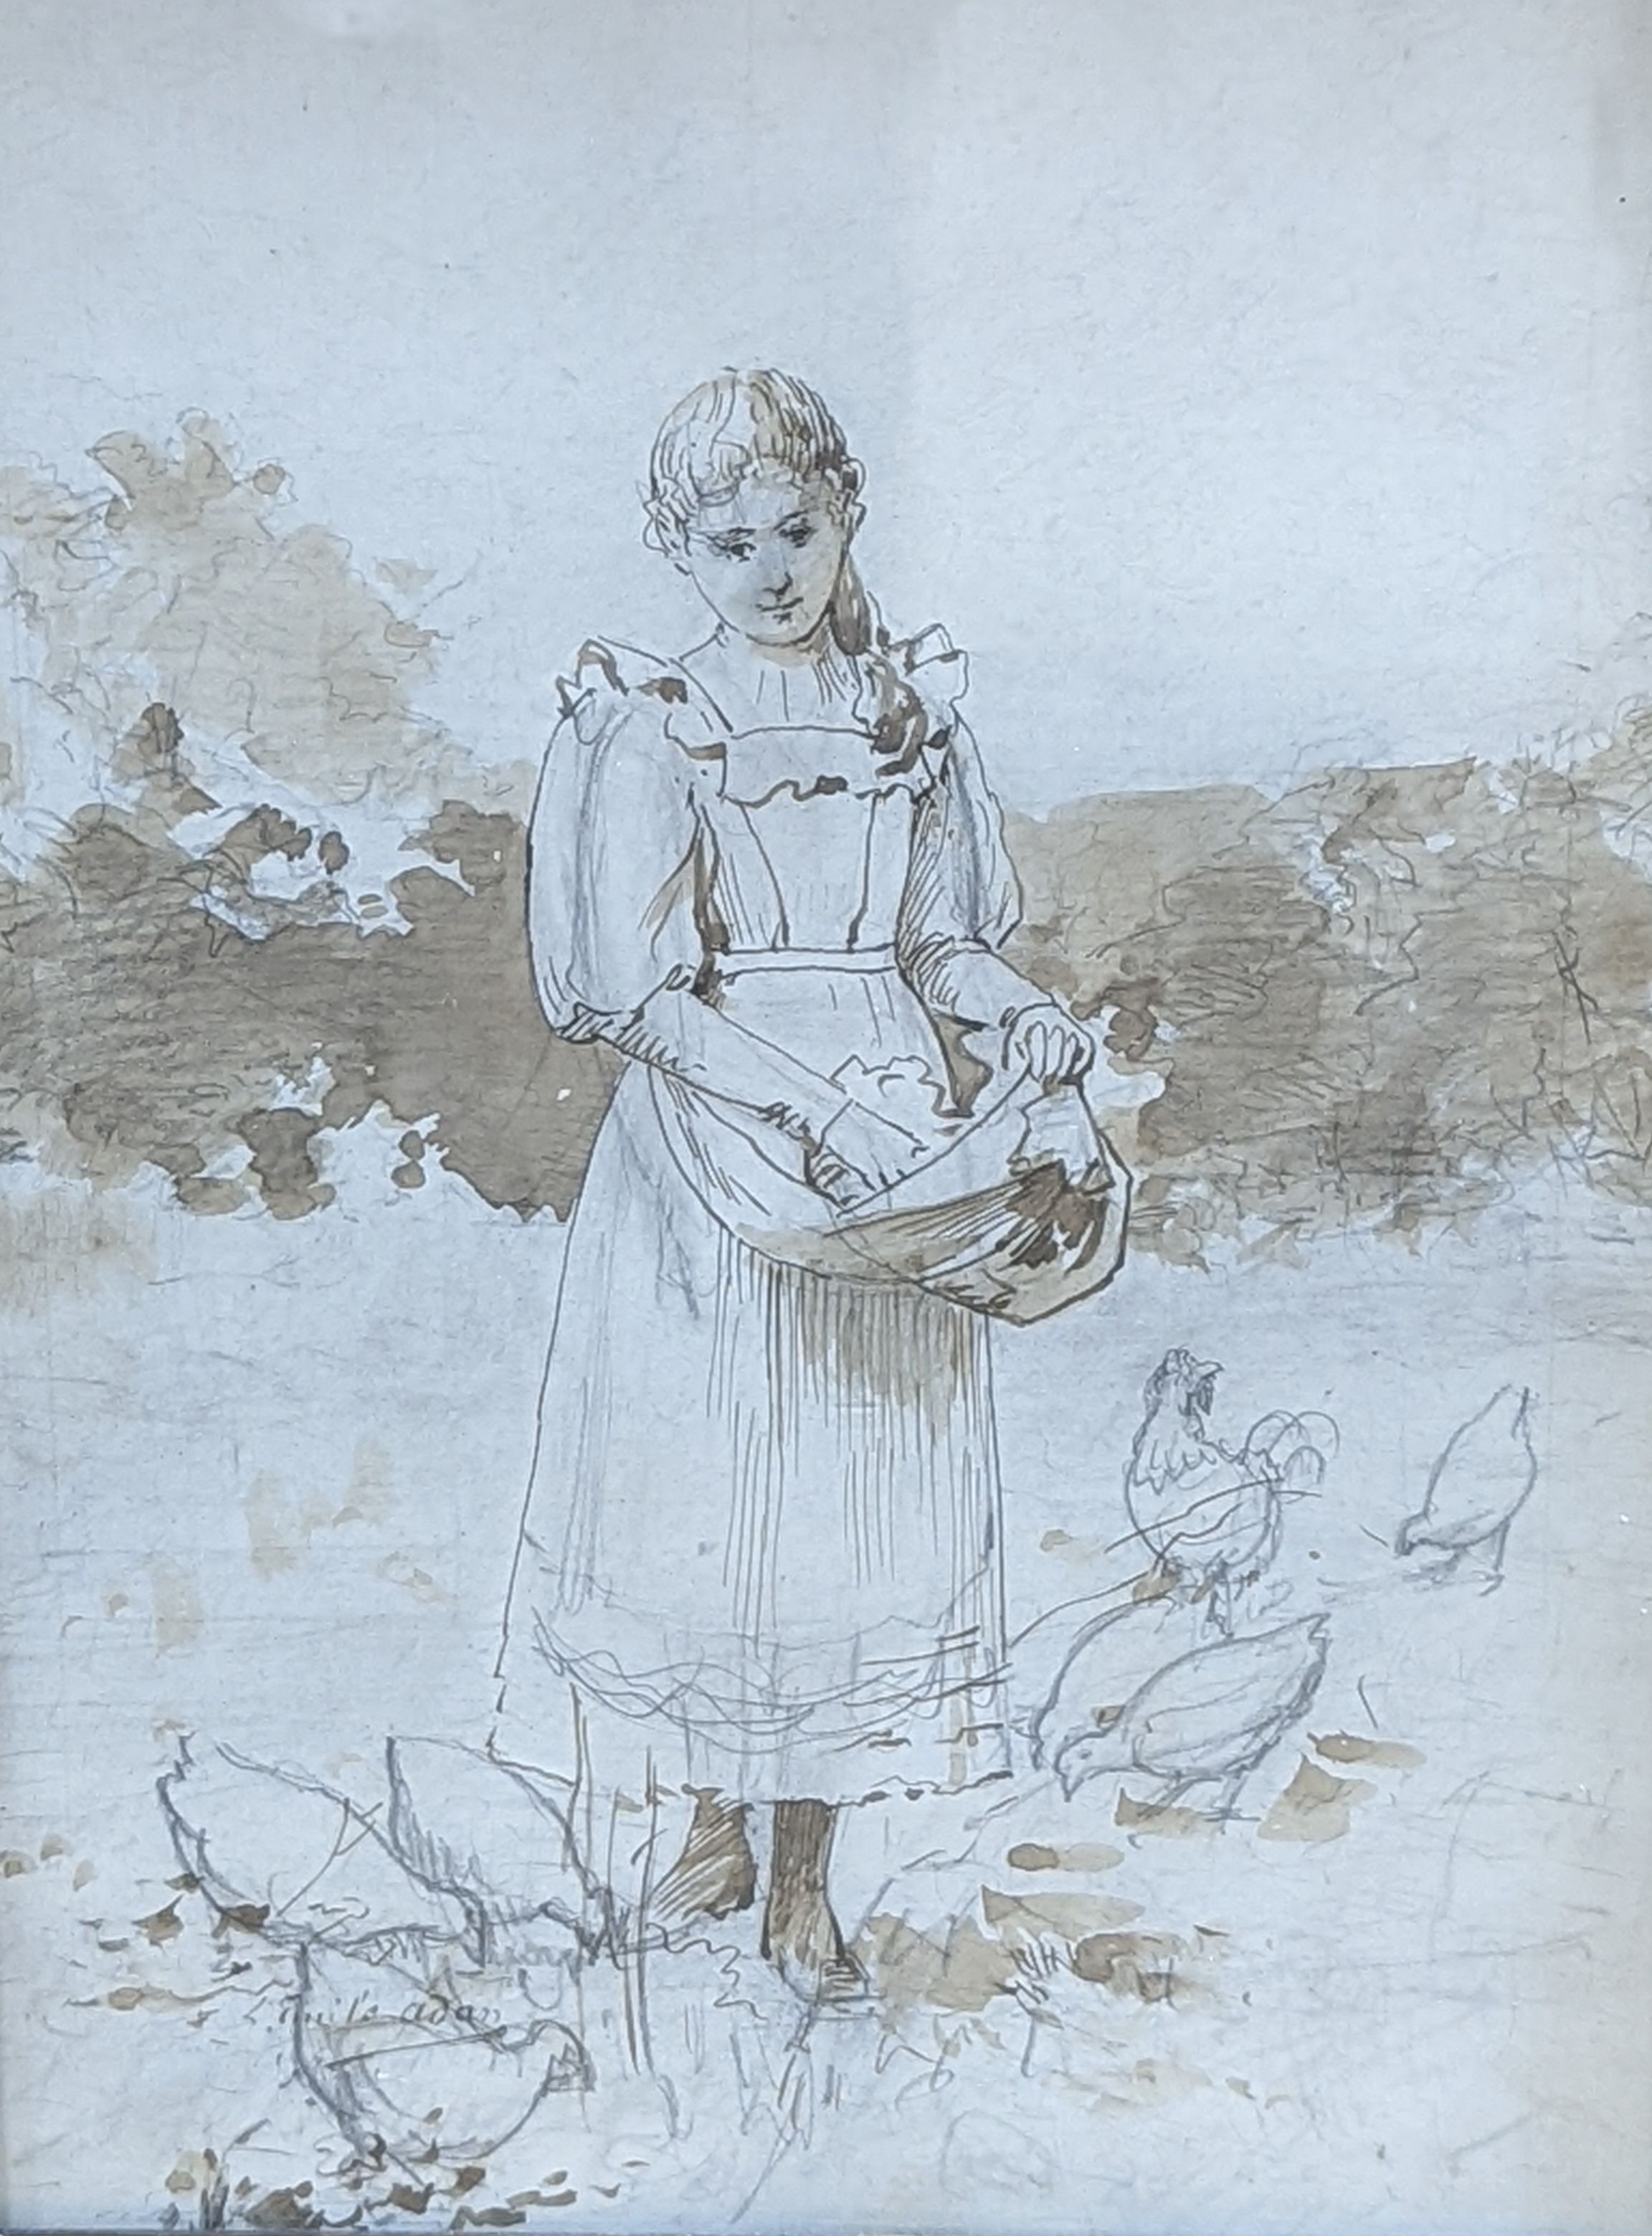 Emile Adam, pencil and wash, Girl feeding chickens, signed, 31 x 23cm